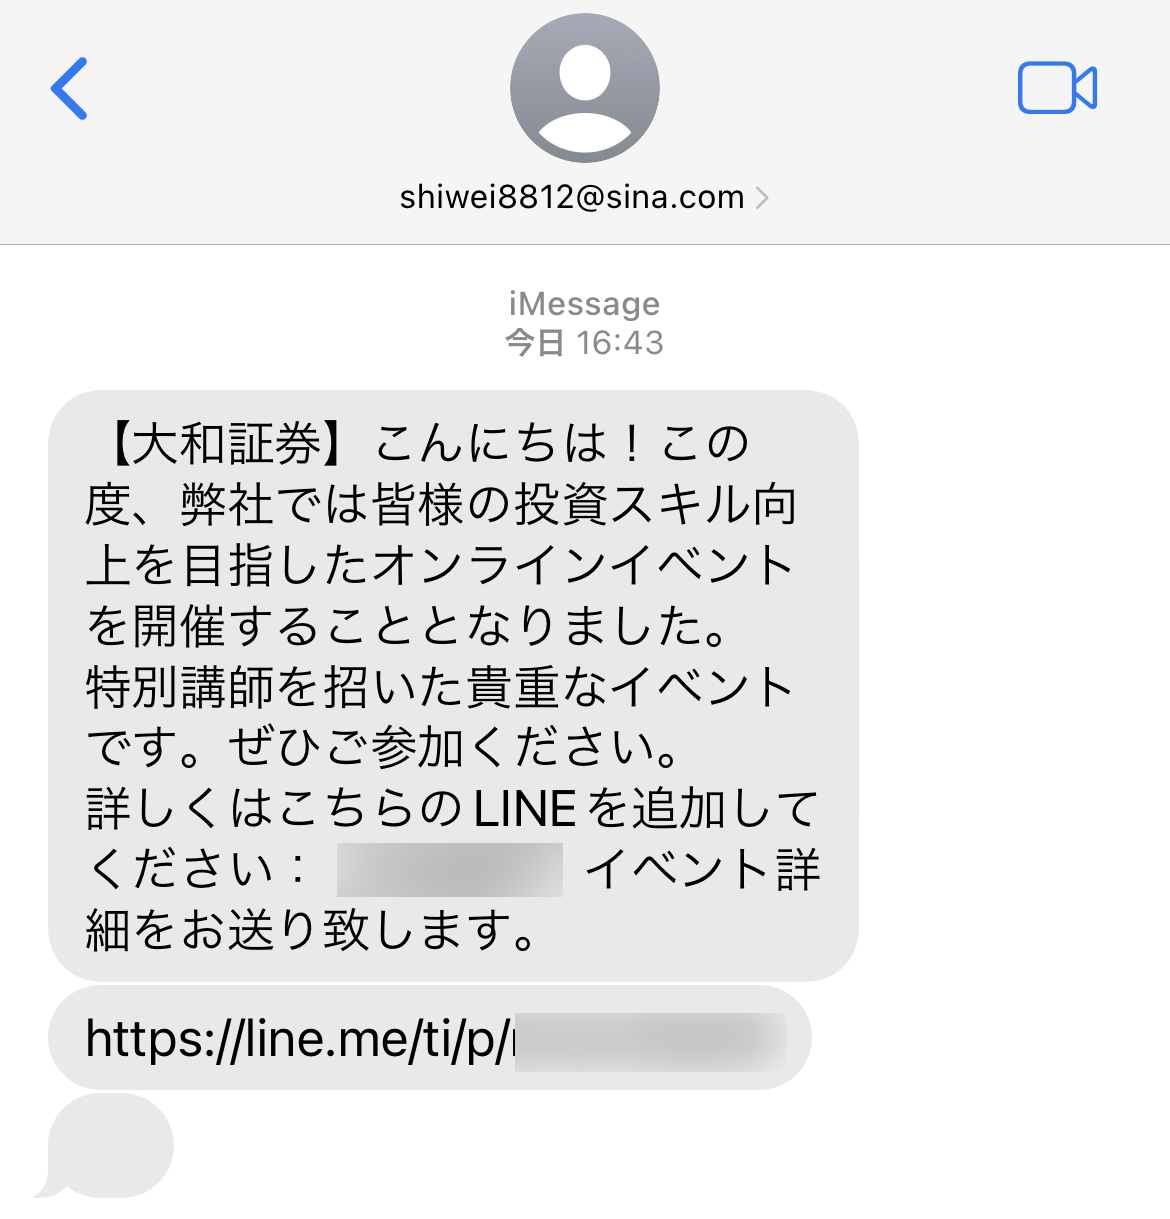 SMS Fishingsagimassage delete 03